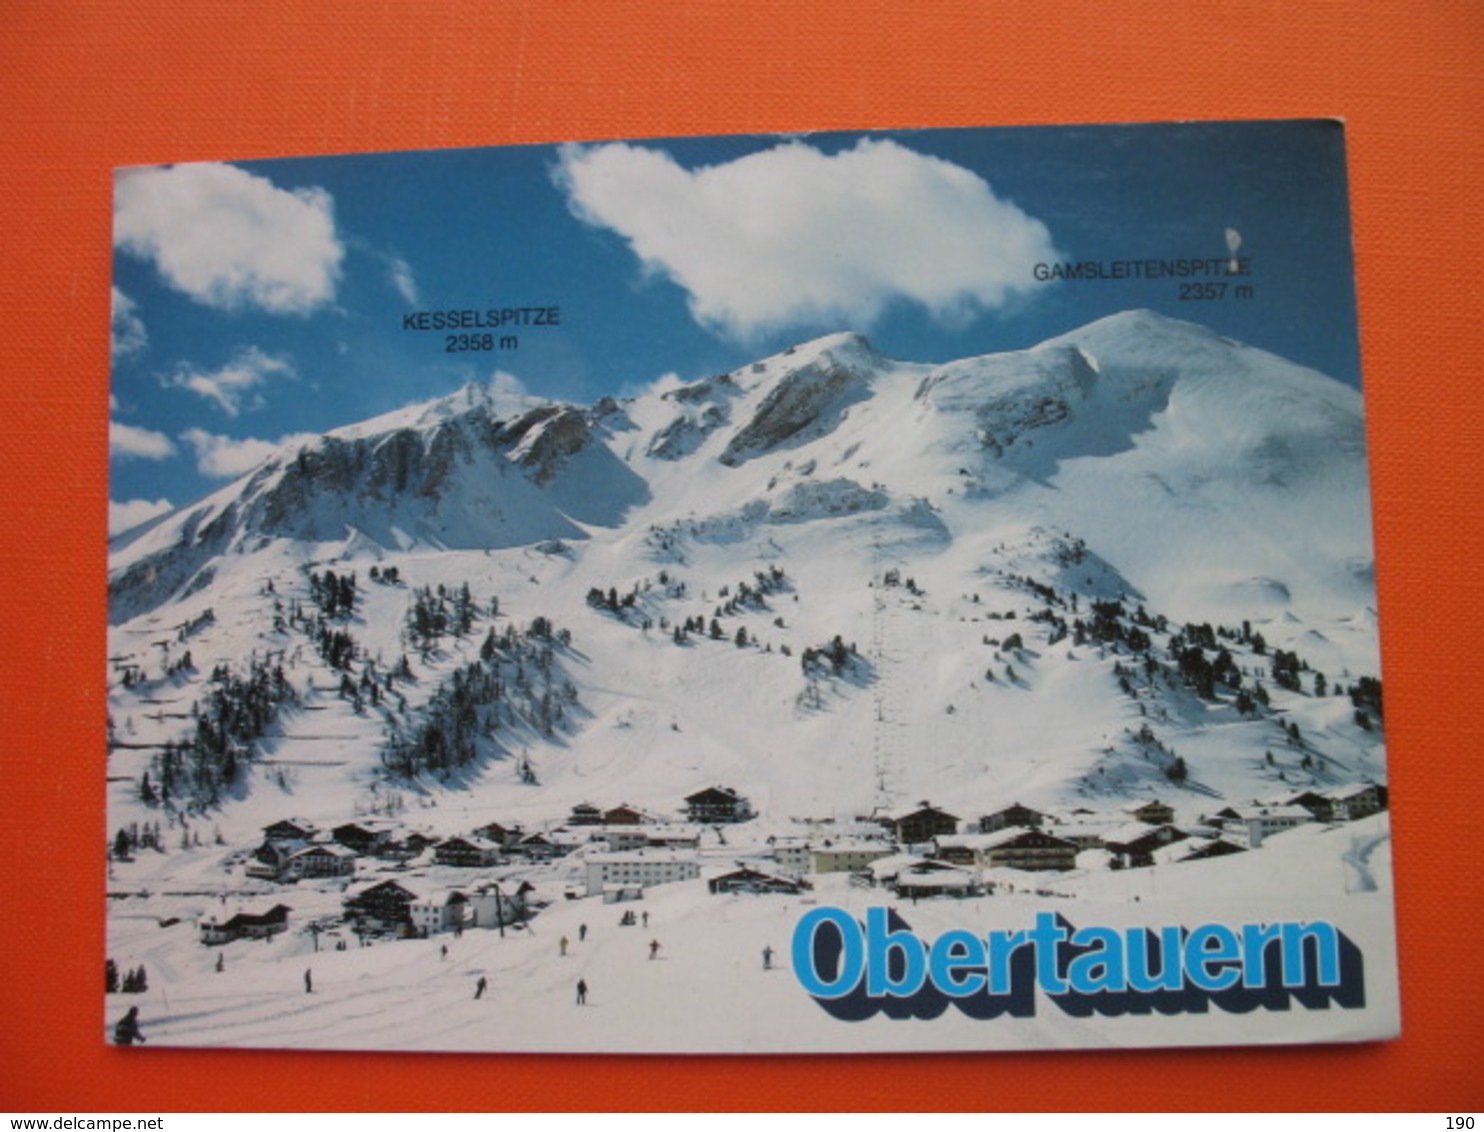 Obertauern.Skiing - Obertauern